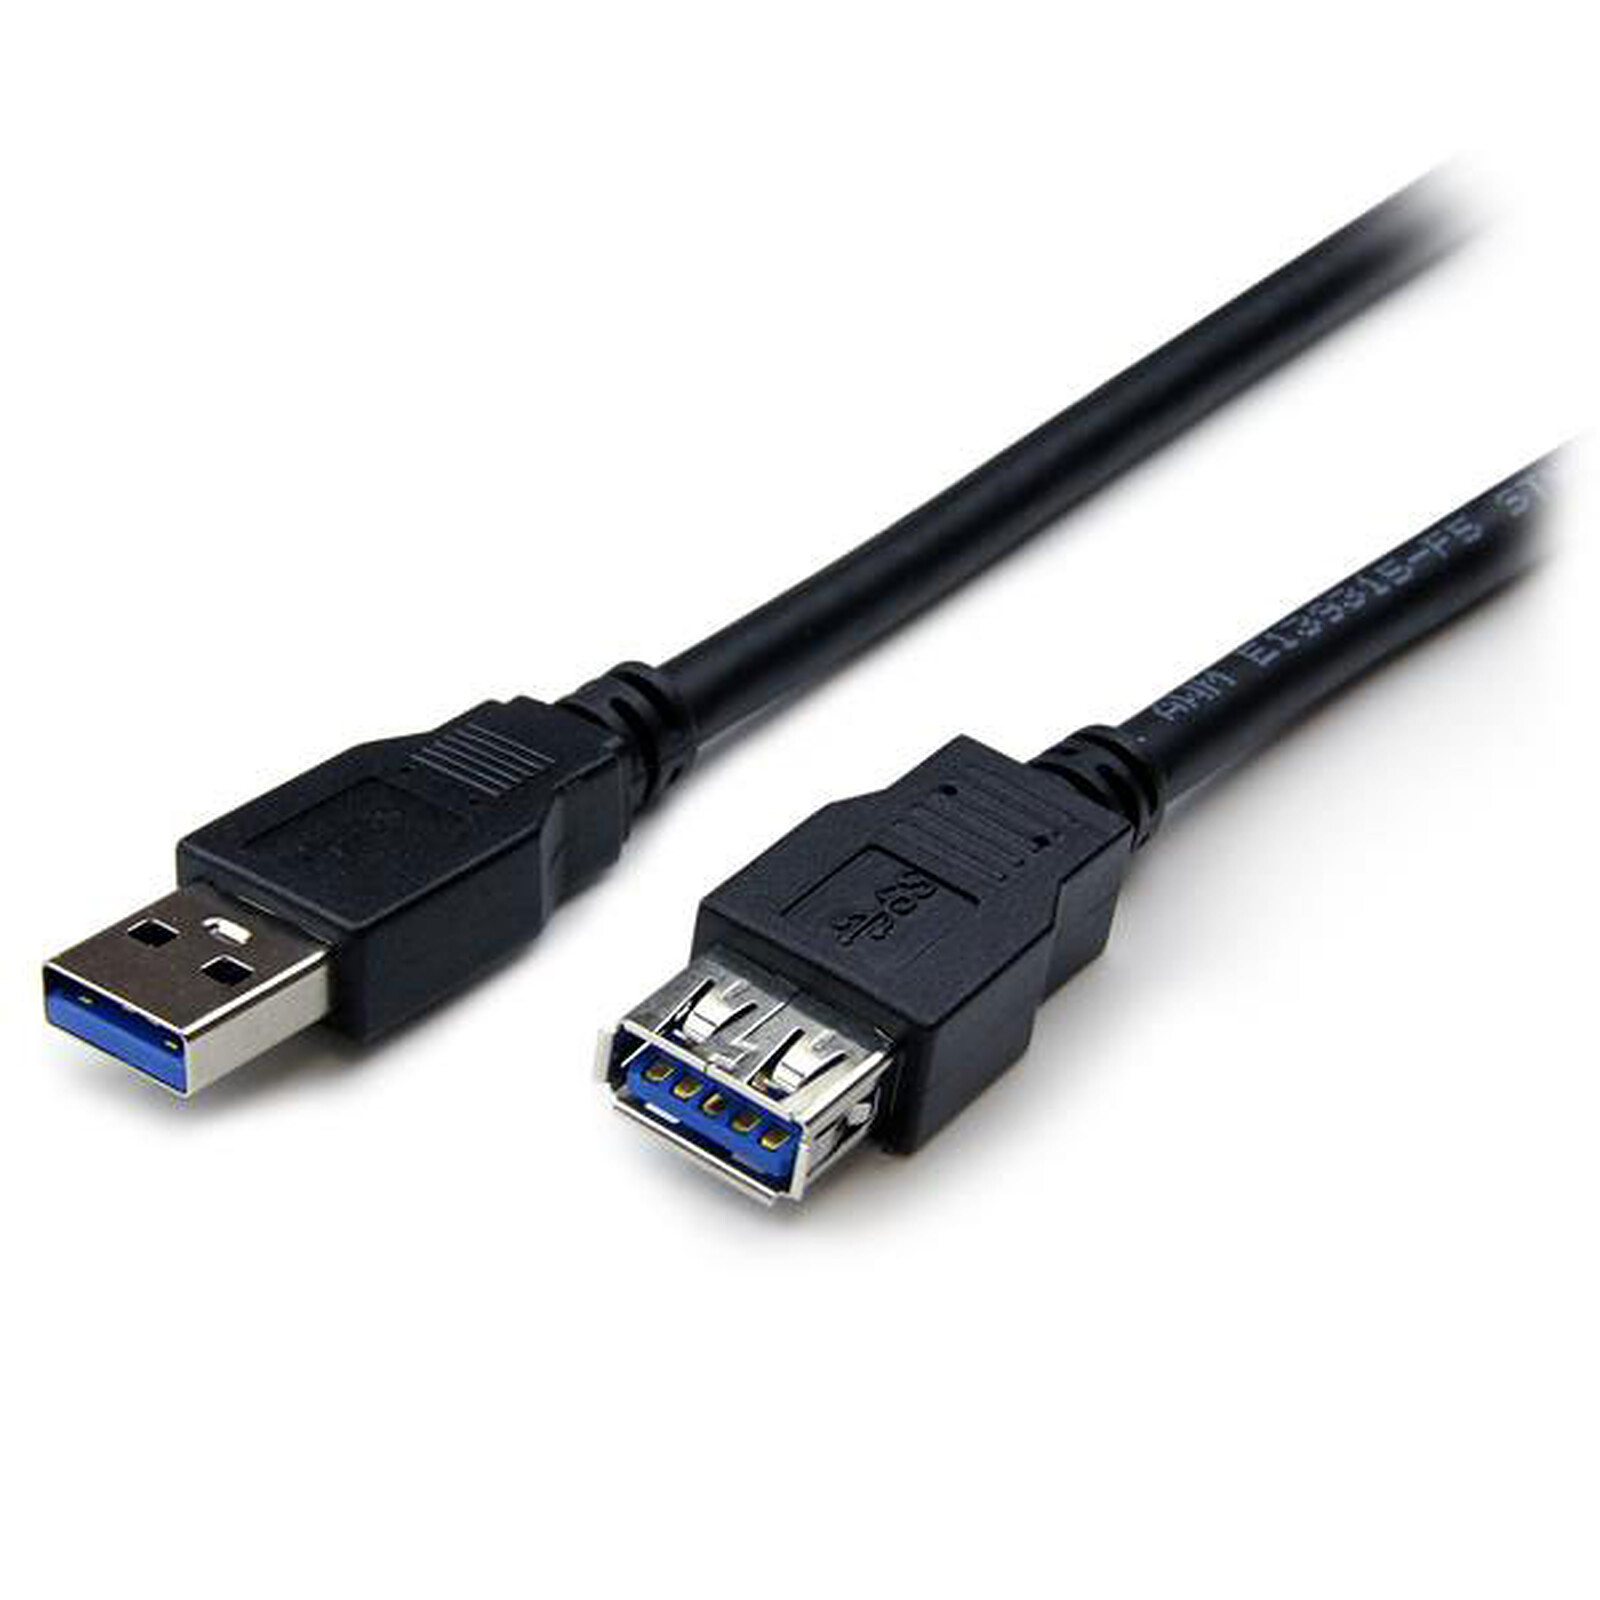 Rallonge USB Mâle/Femelle Tech-com / 2M